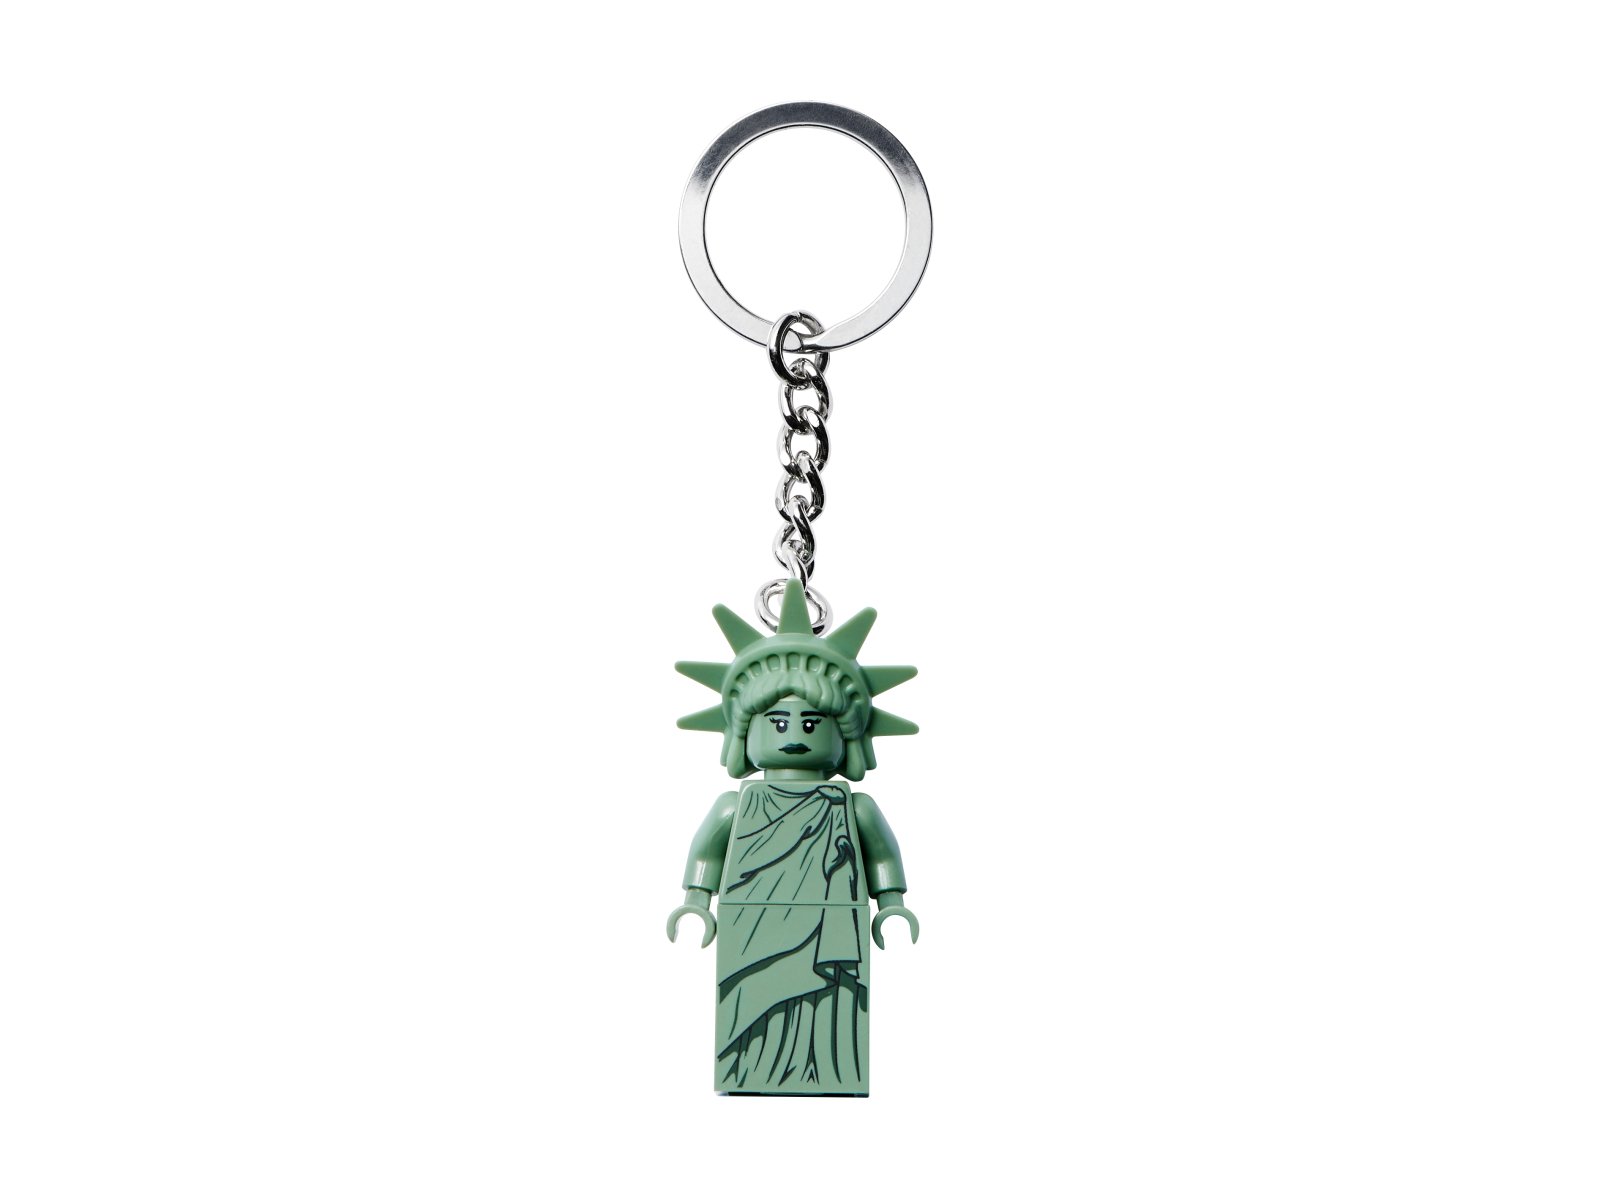 LEGO 854082 Breloczek z Lady Liberty